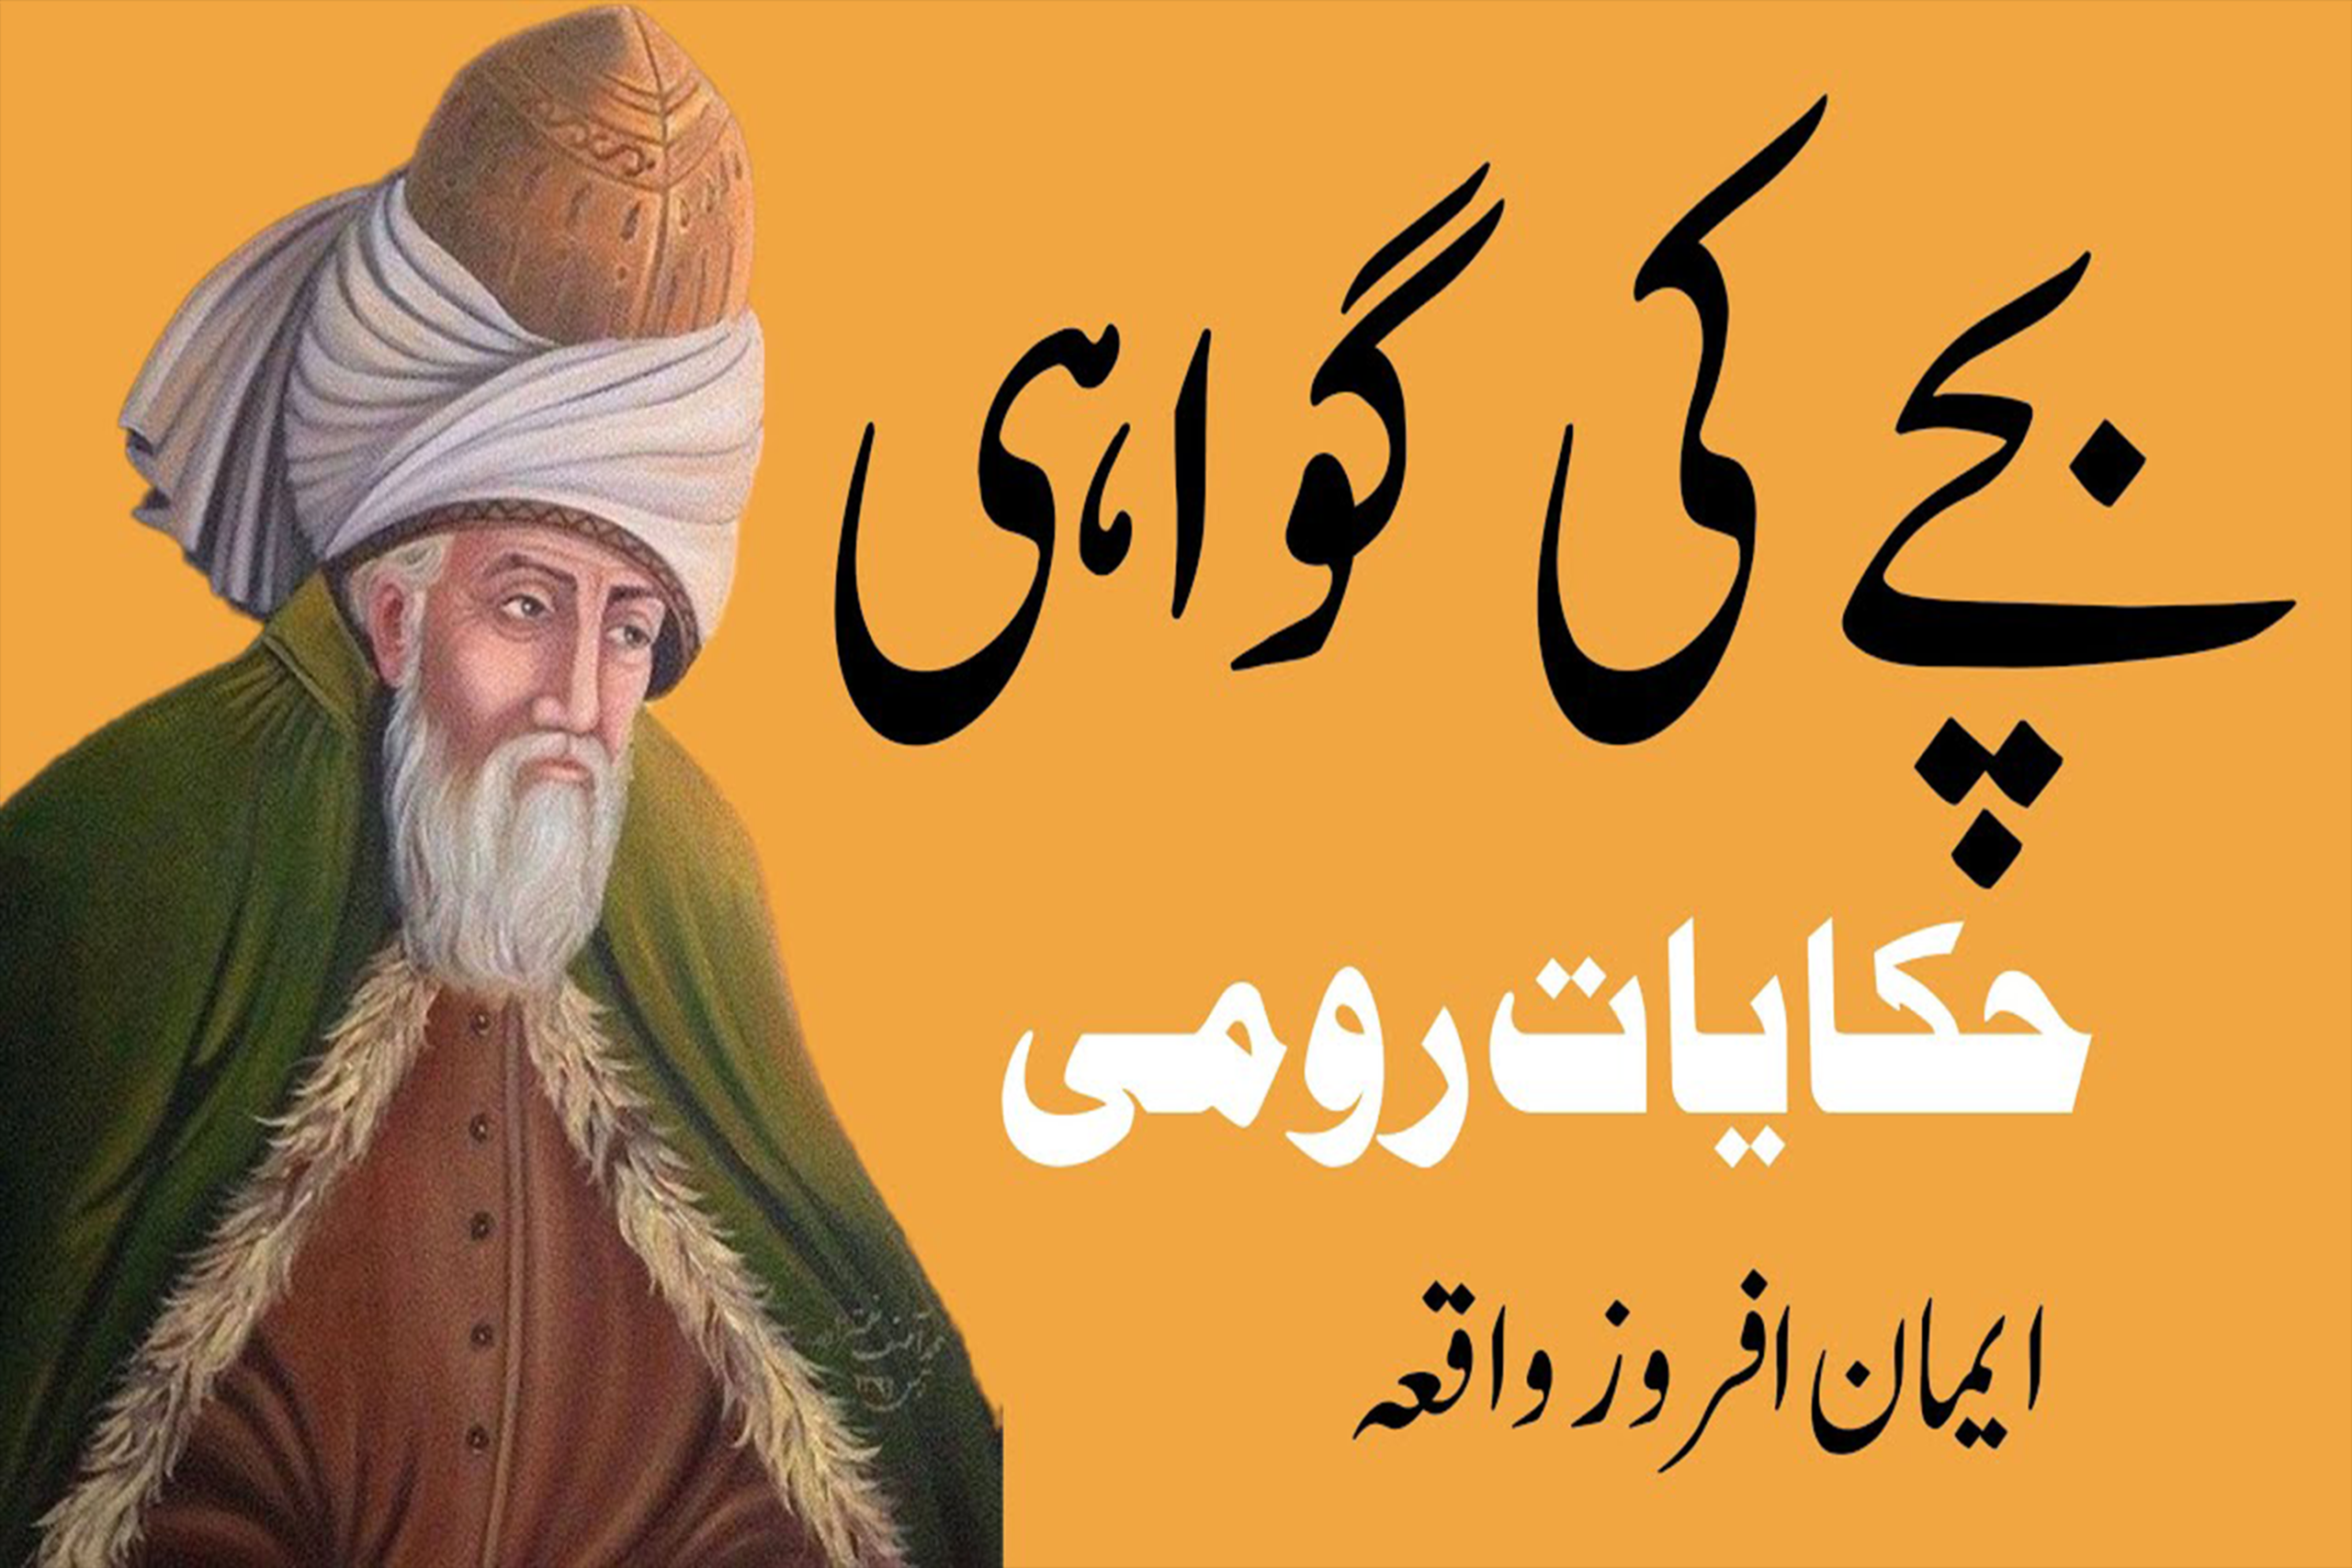 Bachay Ki Gawahi بچے کی گواہی Moral Lesson Story by Maulana Rumi in Urdu Hakayat-e-Rumi in urdu Stories for Kids